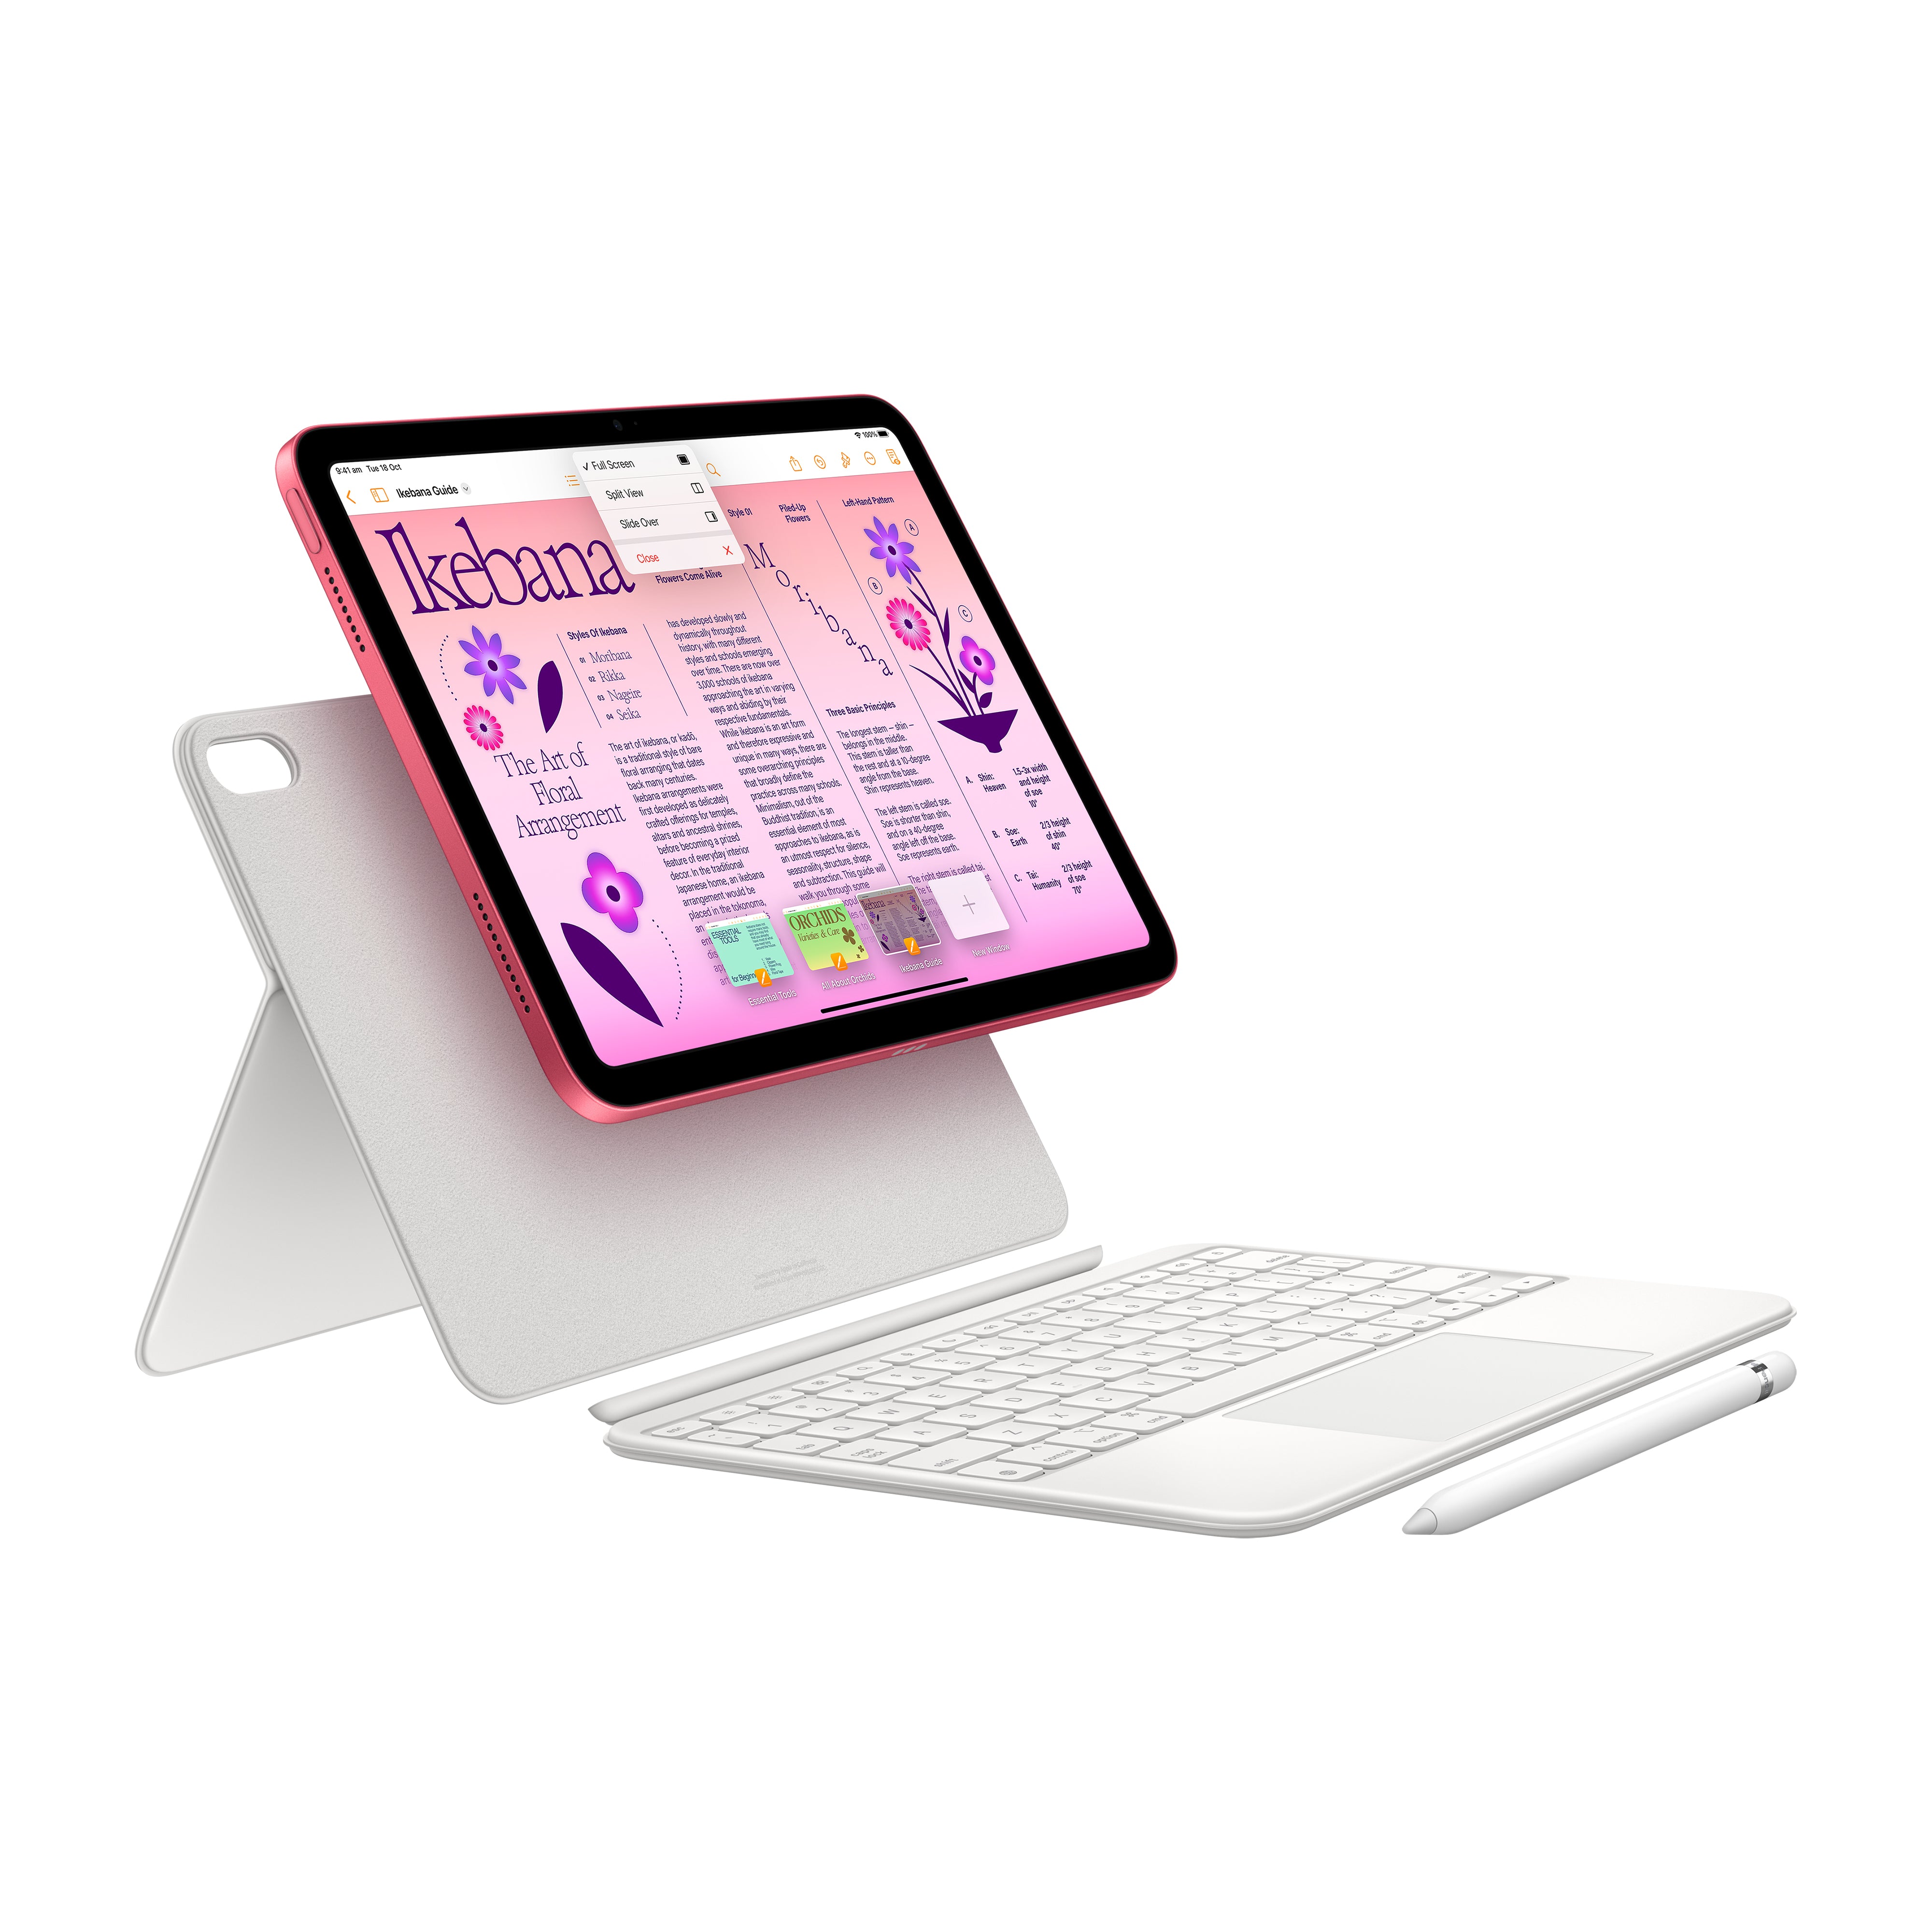 iPad (10th Gen) 10.9in Wi-Fi + Cellular 64GB - Pink